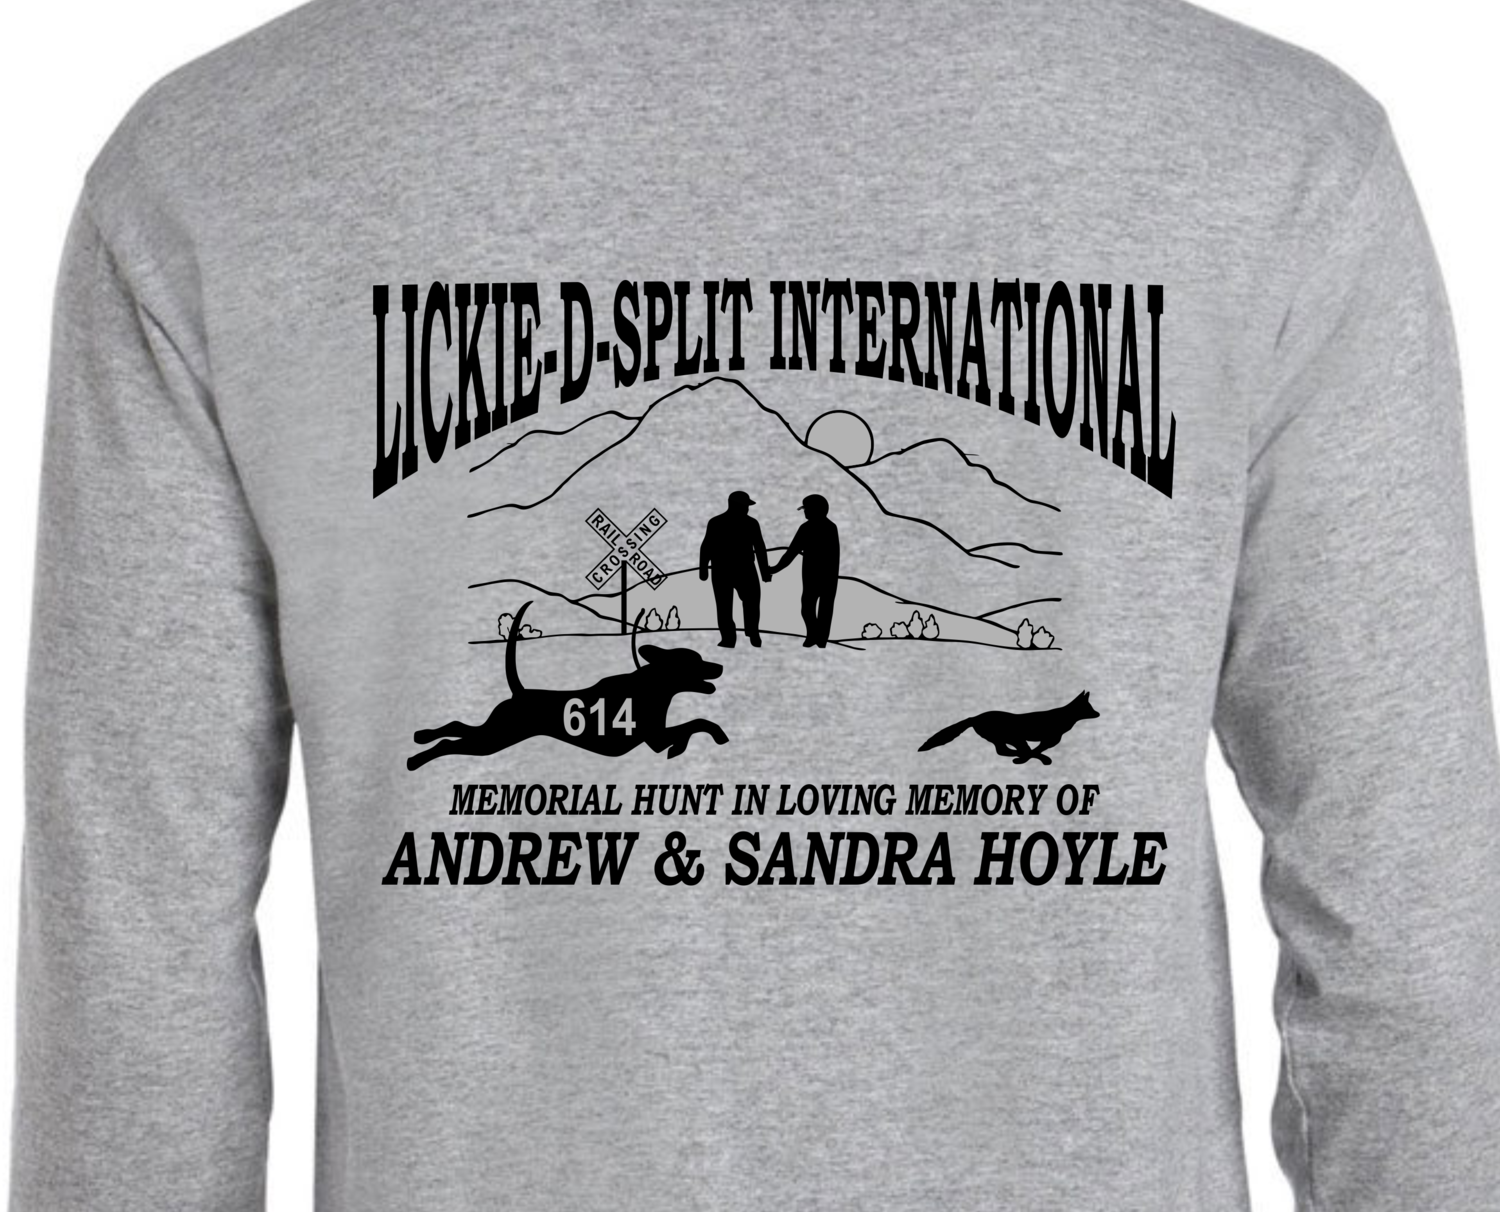 Lickie-D-Split International - Long Sleeve Cotton T-Shirt - Adult & Youth